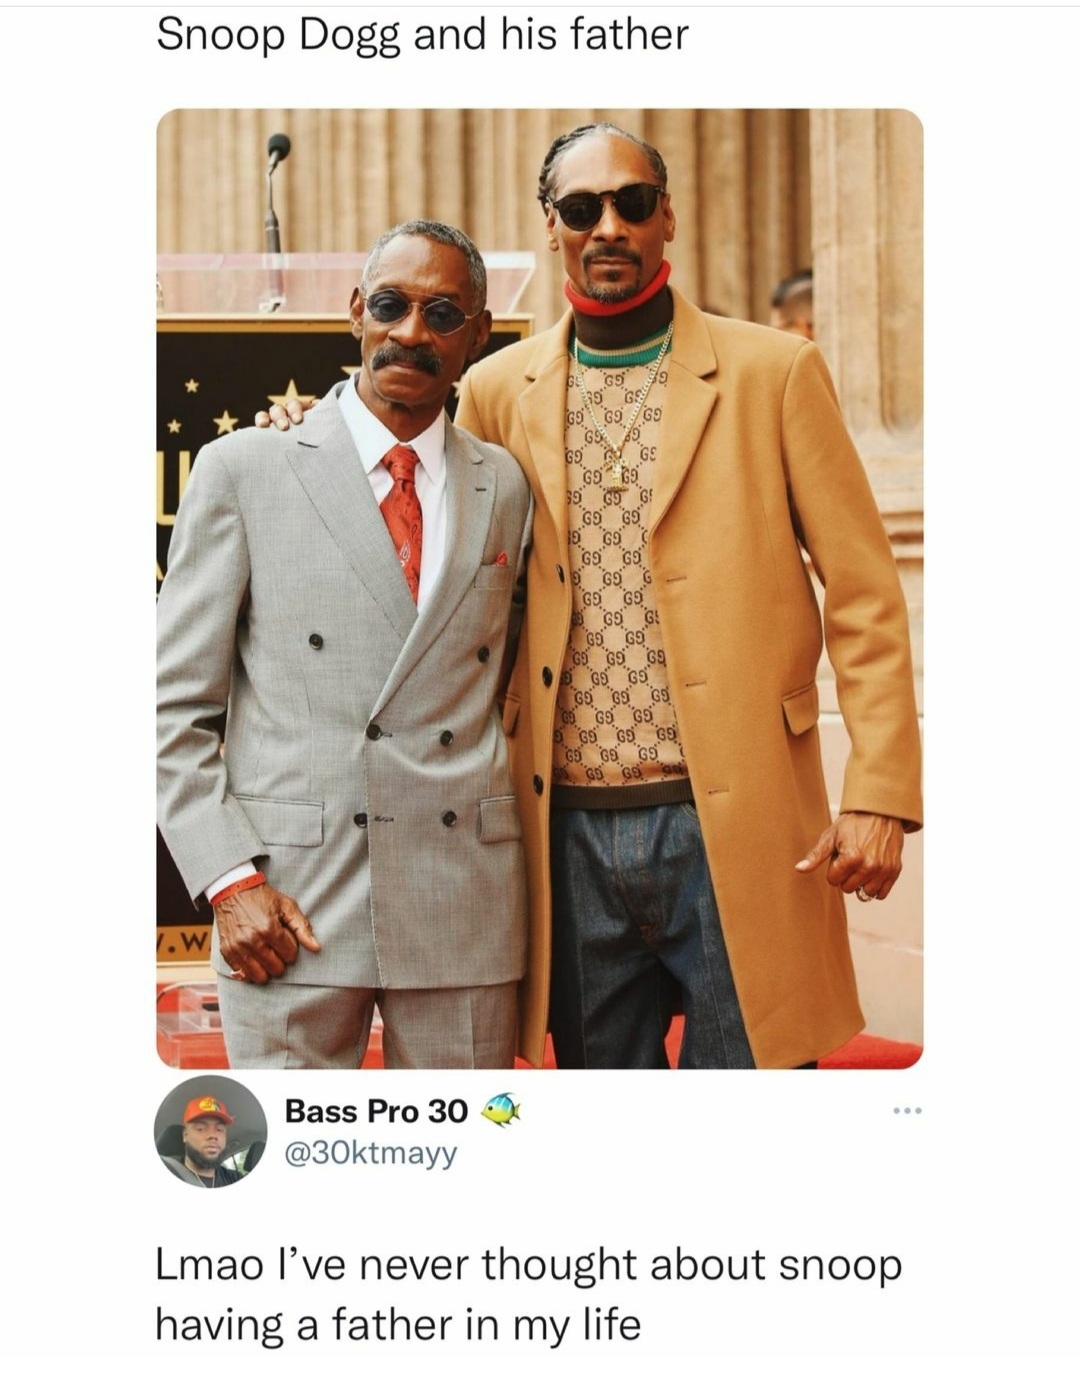 Snoop Dogg's dad